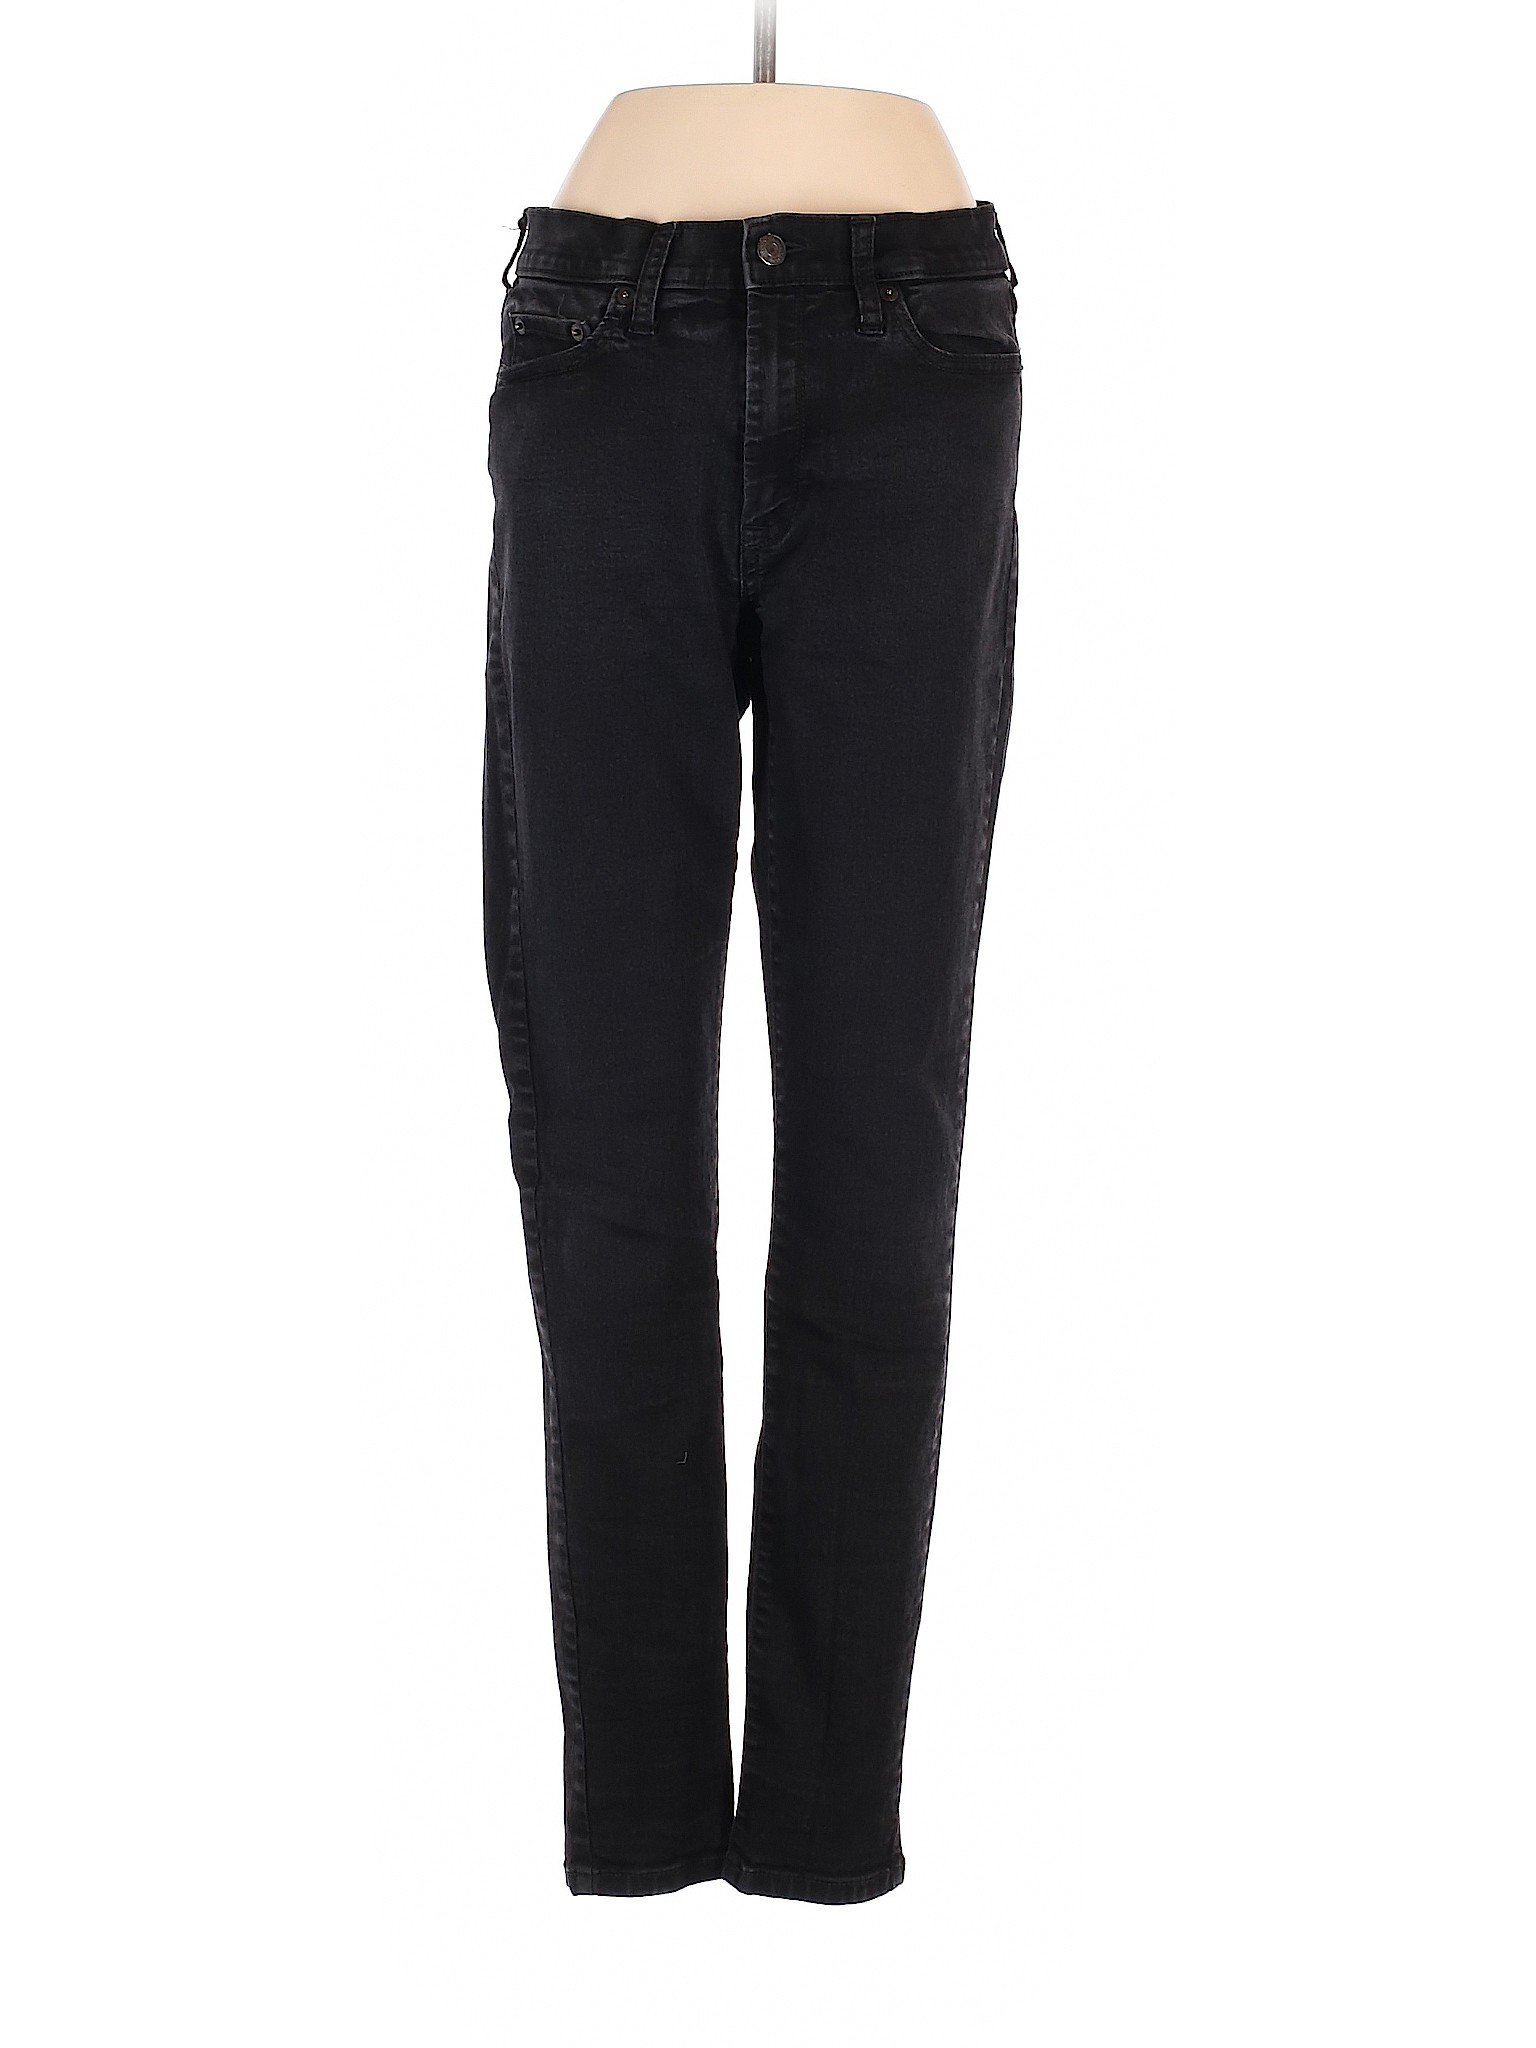 Banana Republic Factory Store Women Black Jeans 27W | eBay